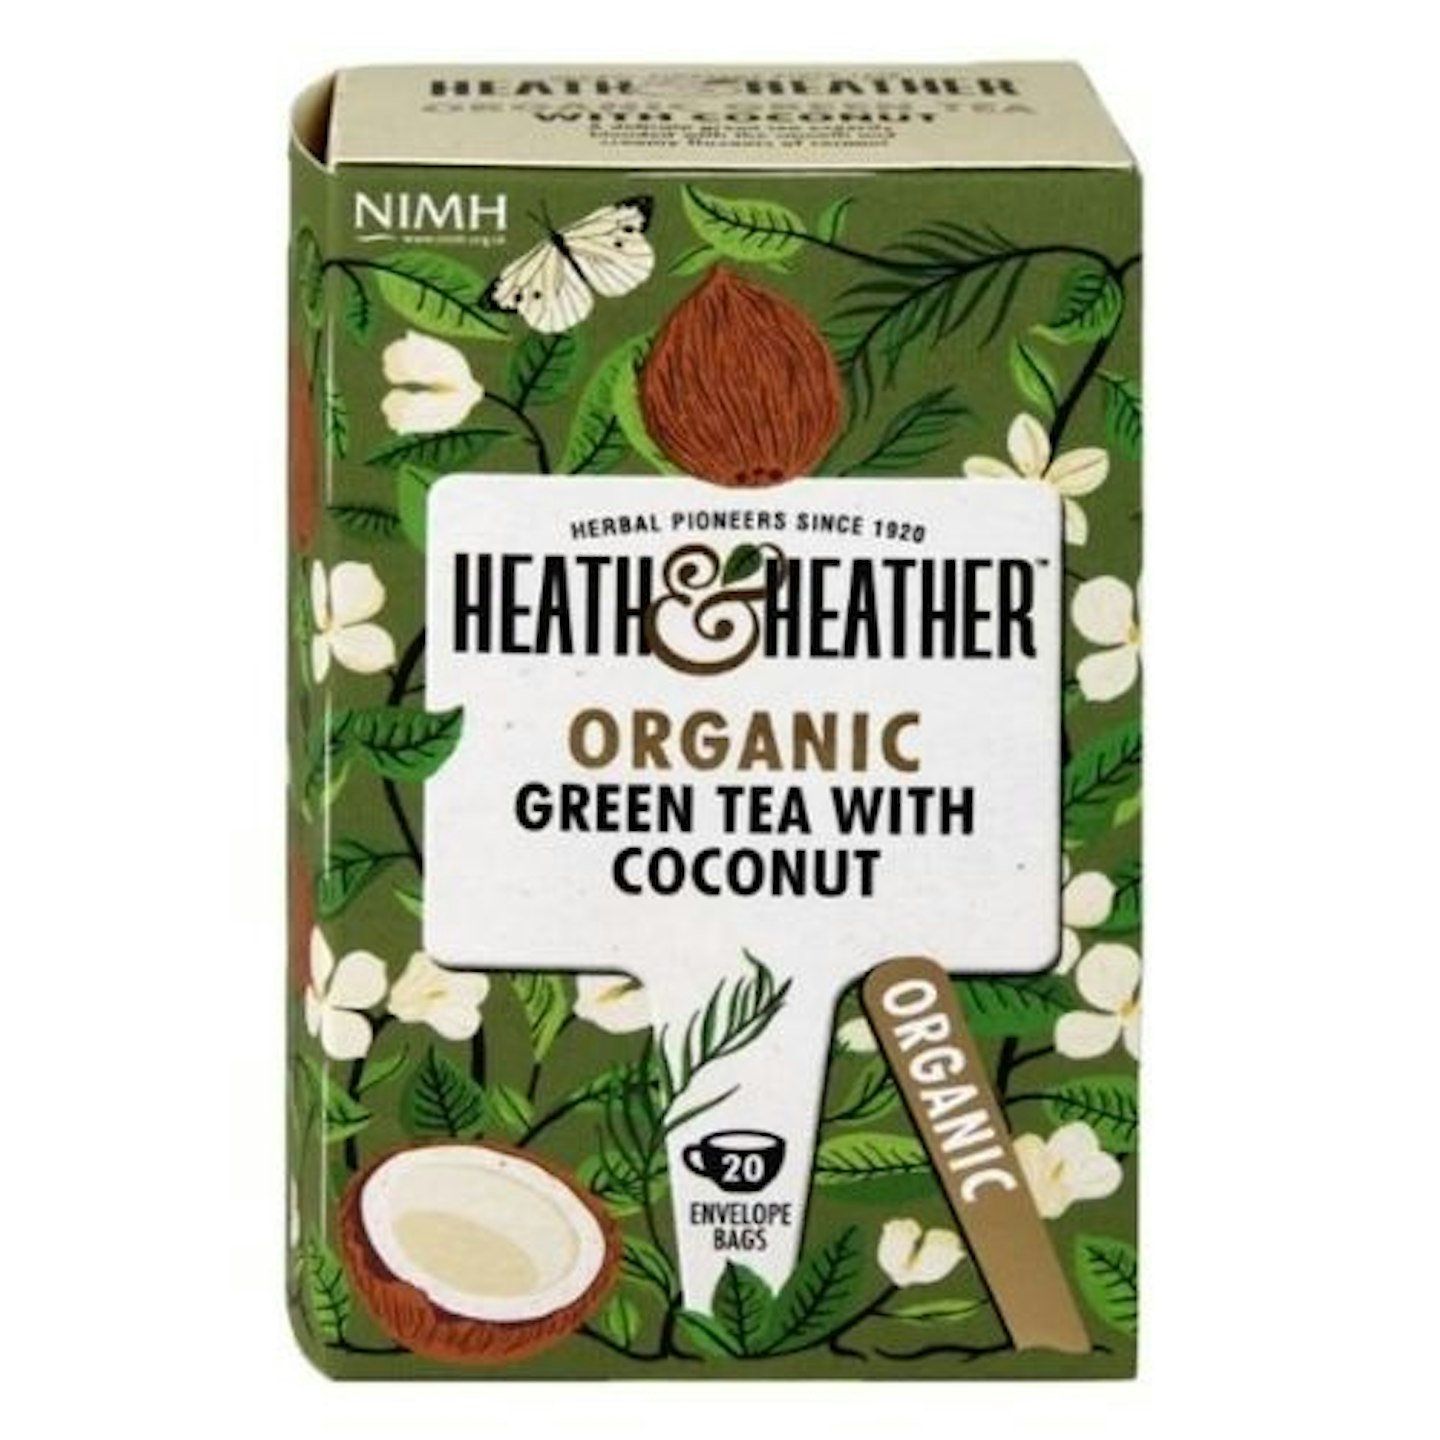 Heath & Heather Organic Green Tea with Coconut